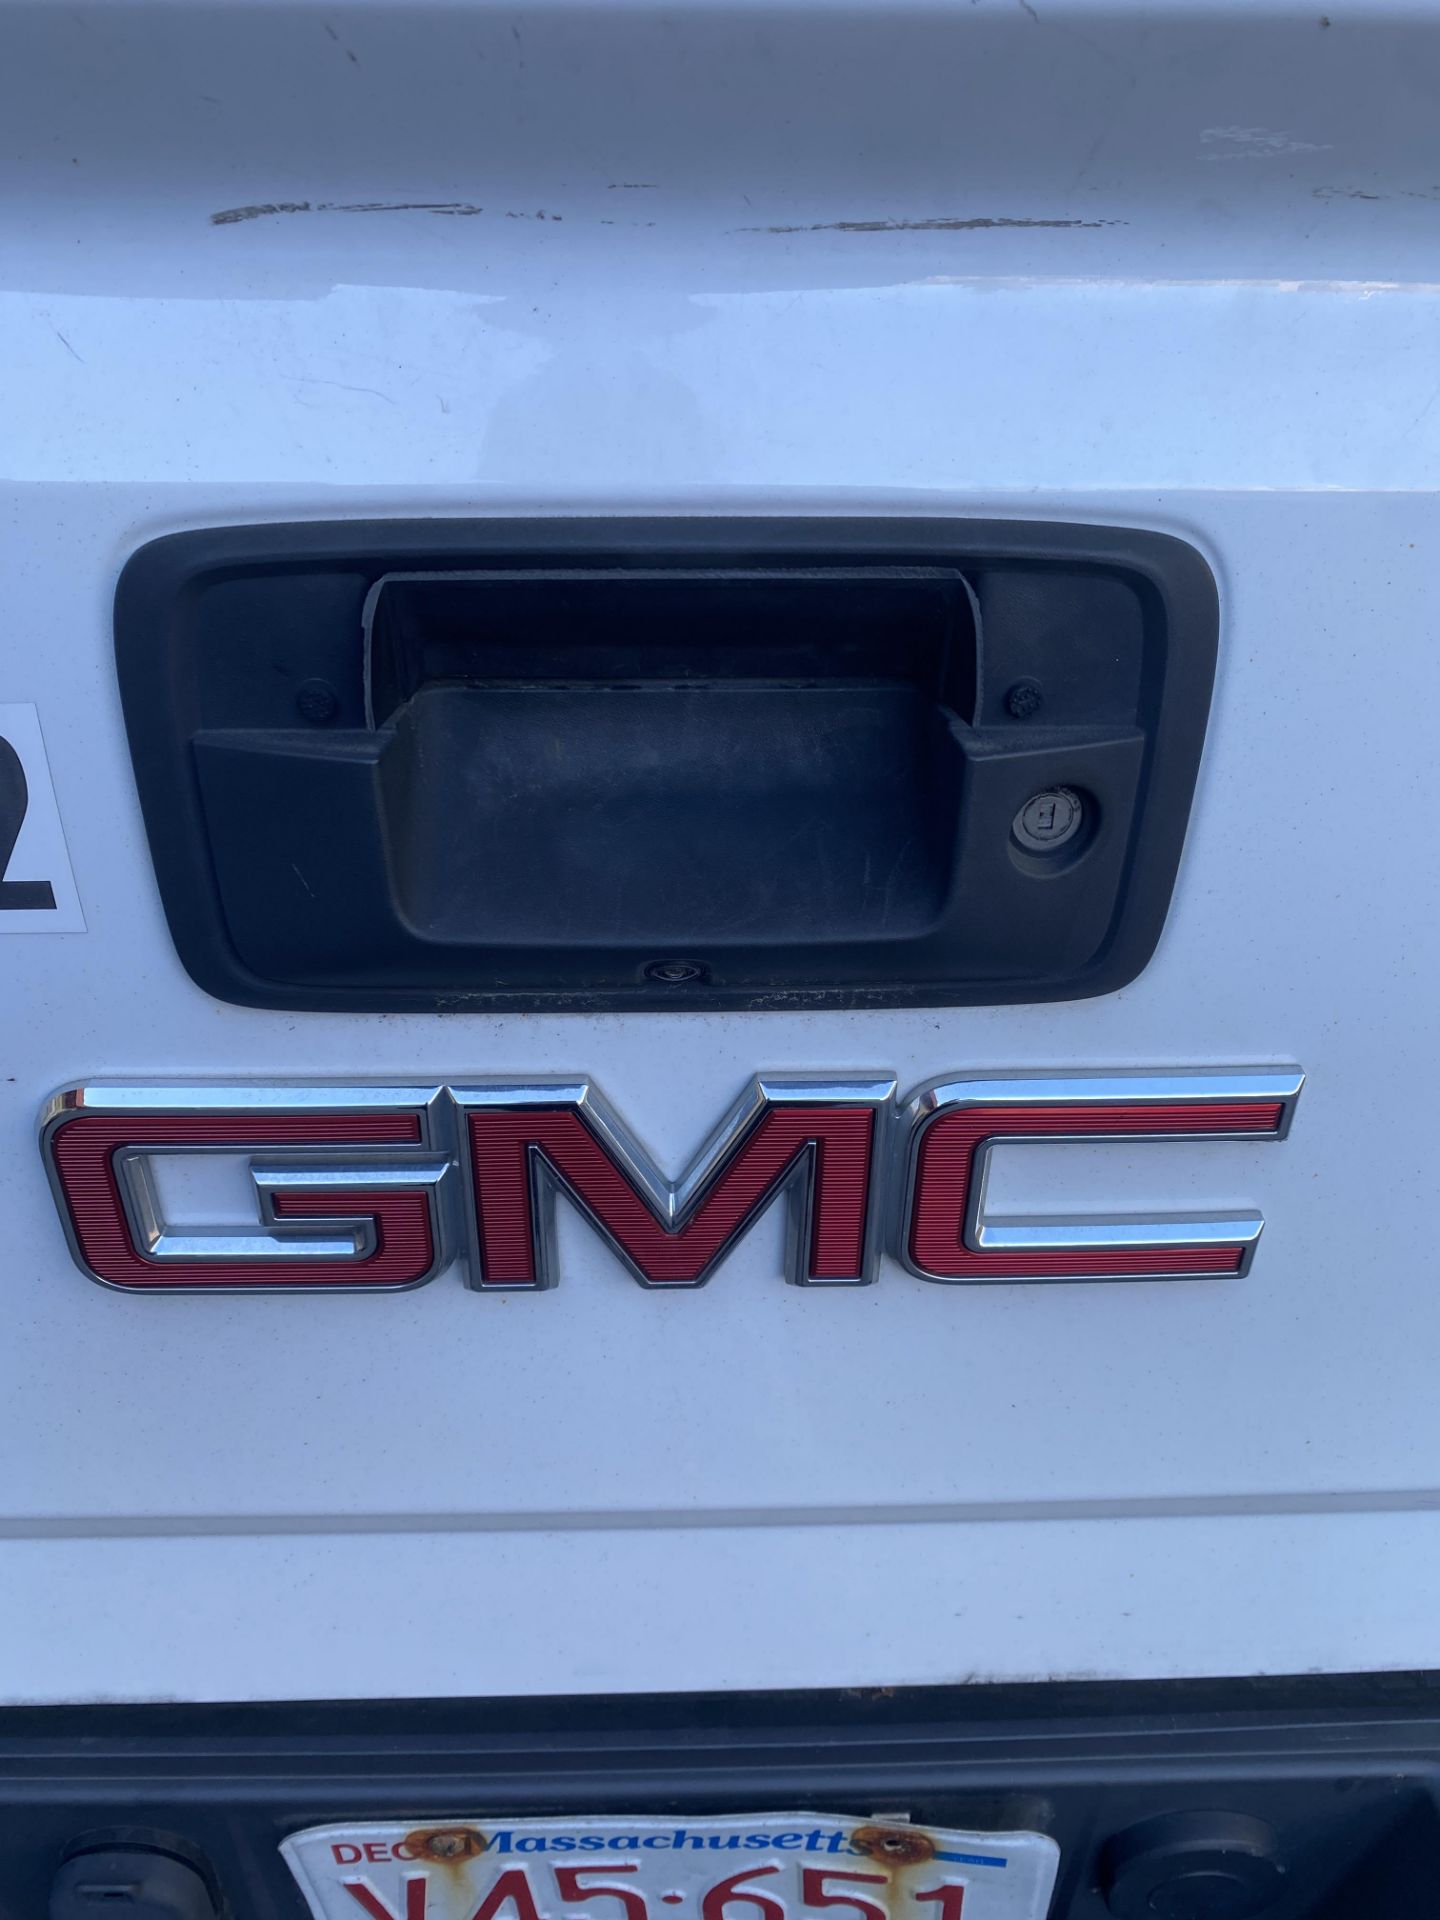 2016 GMC Sierra Pickup Truck, 2 Door, 8' Bed, 8 Cylinder Gas, 4 WD, Backup Cam, Odom: 104,781, VIN - Image 8 of 11